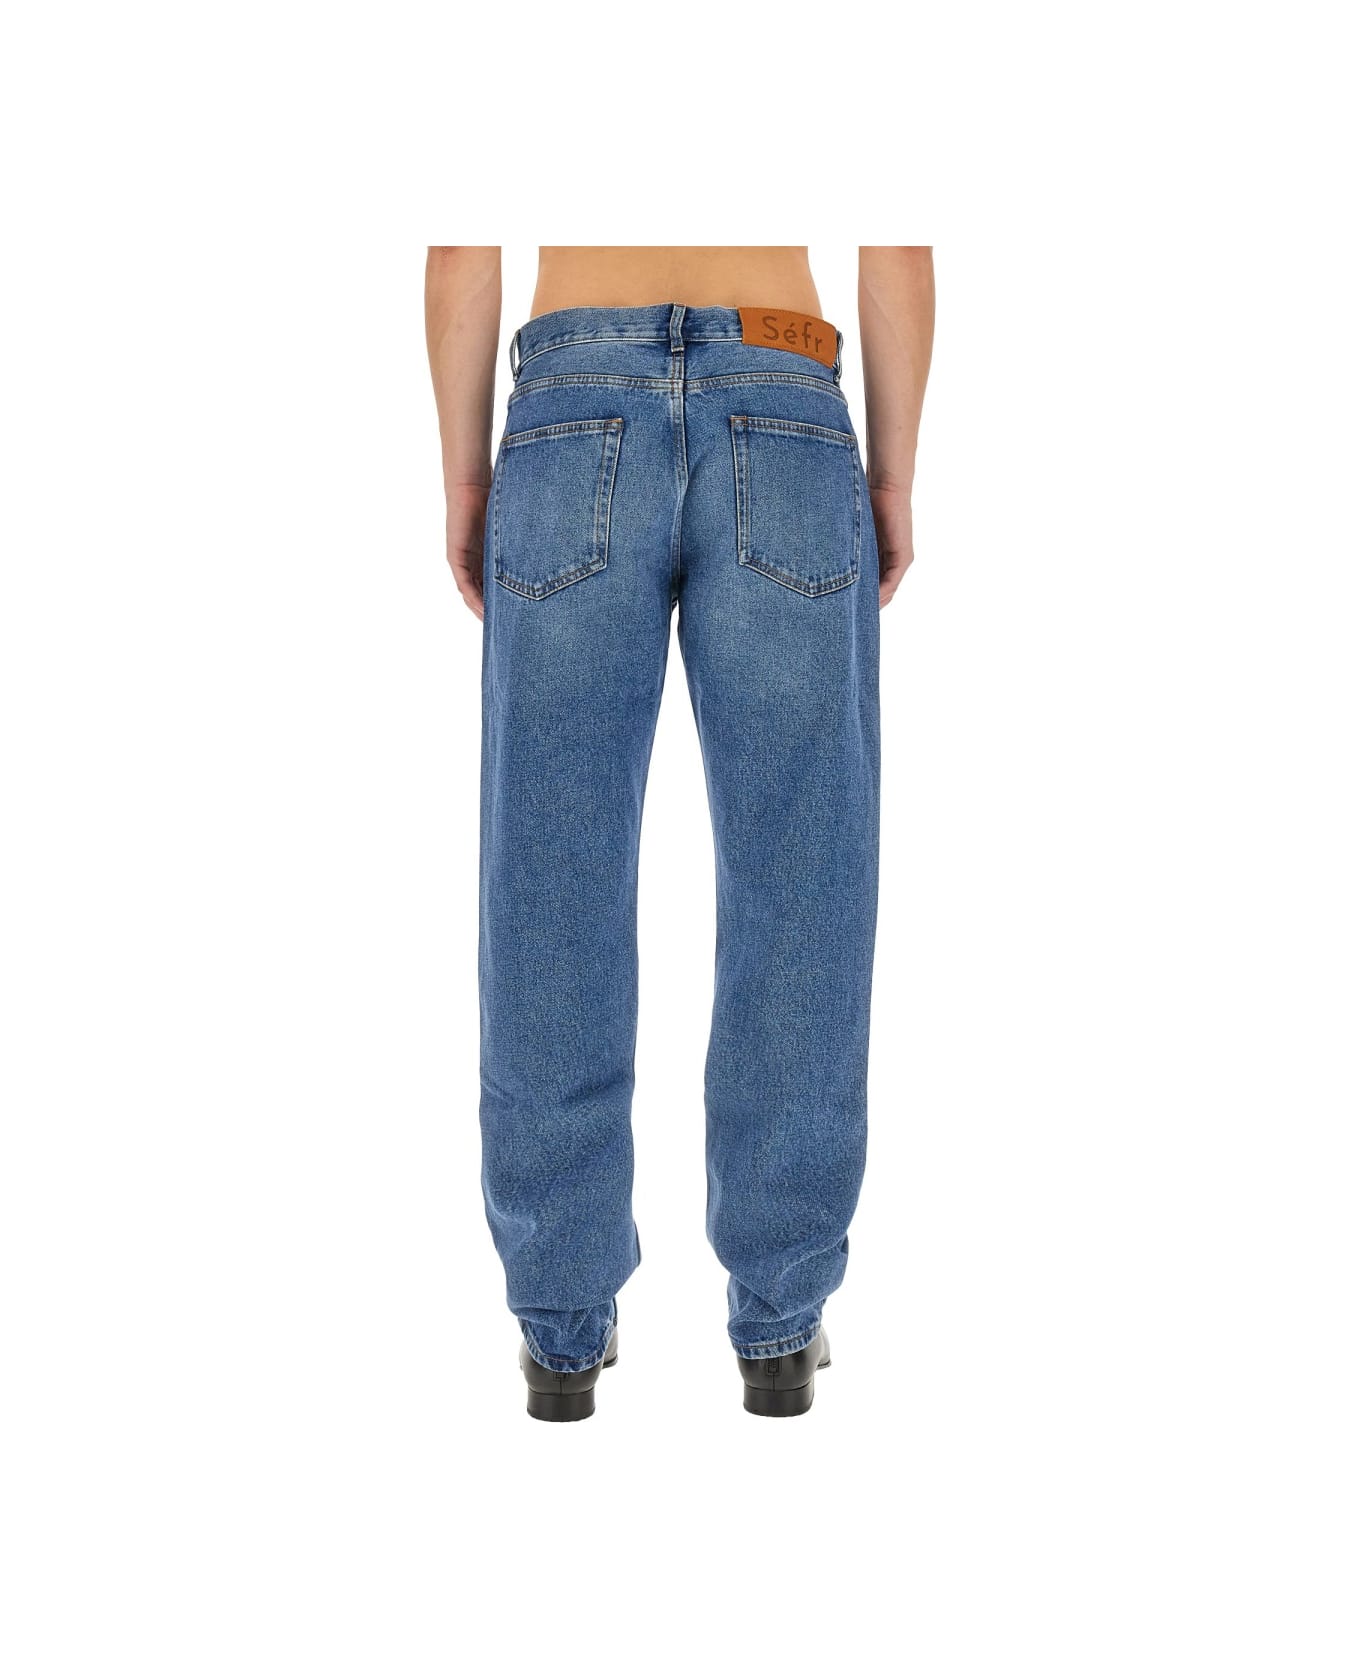 Séfr Jeans Straight Cut - BLUE デニム